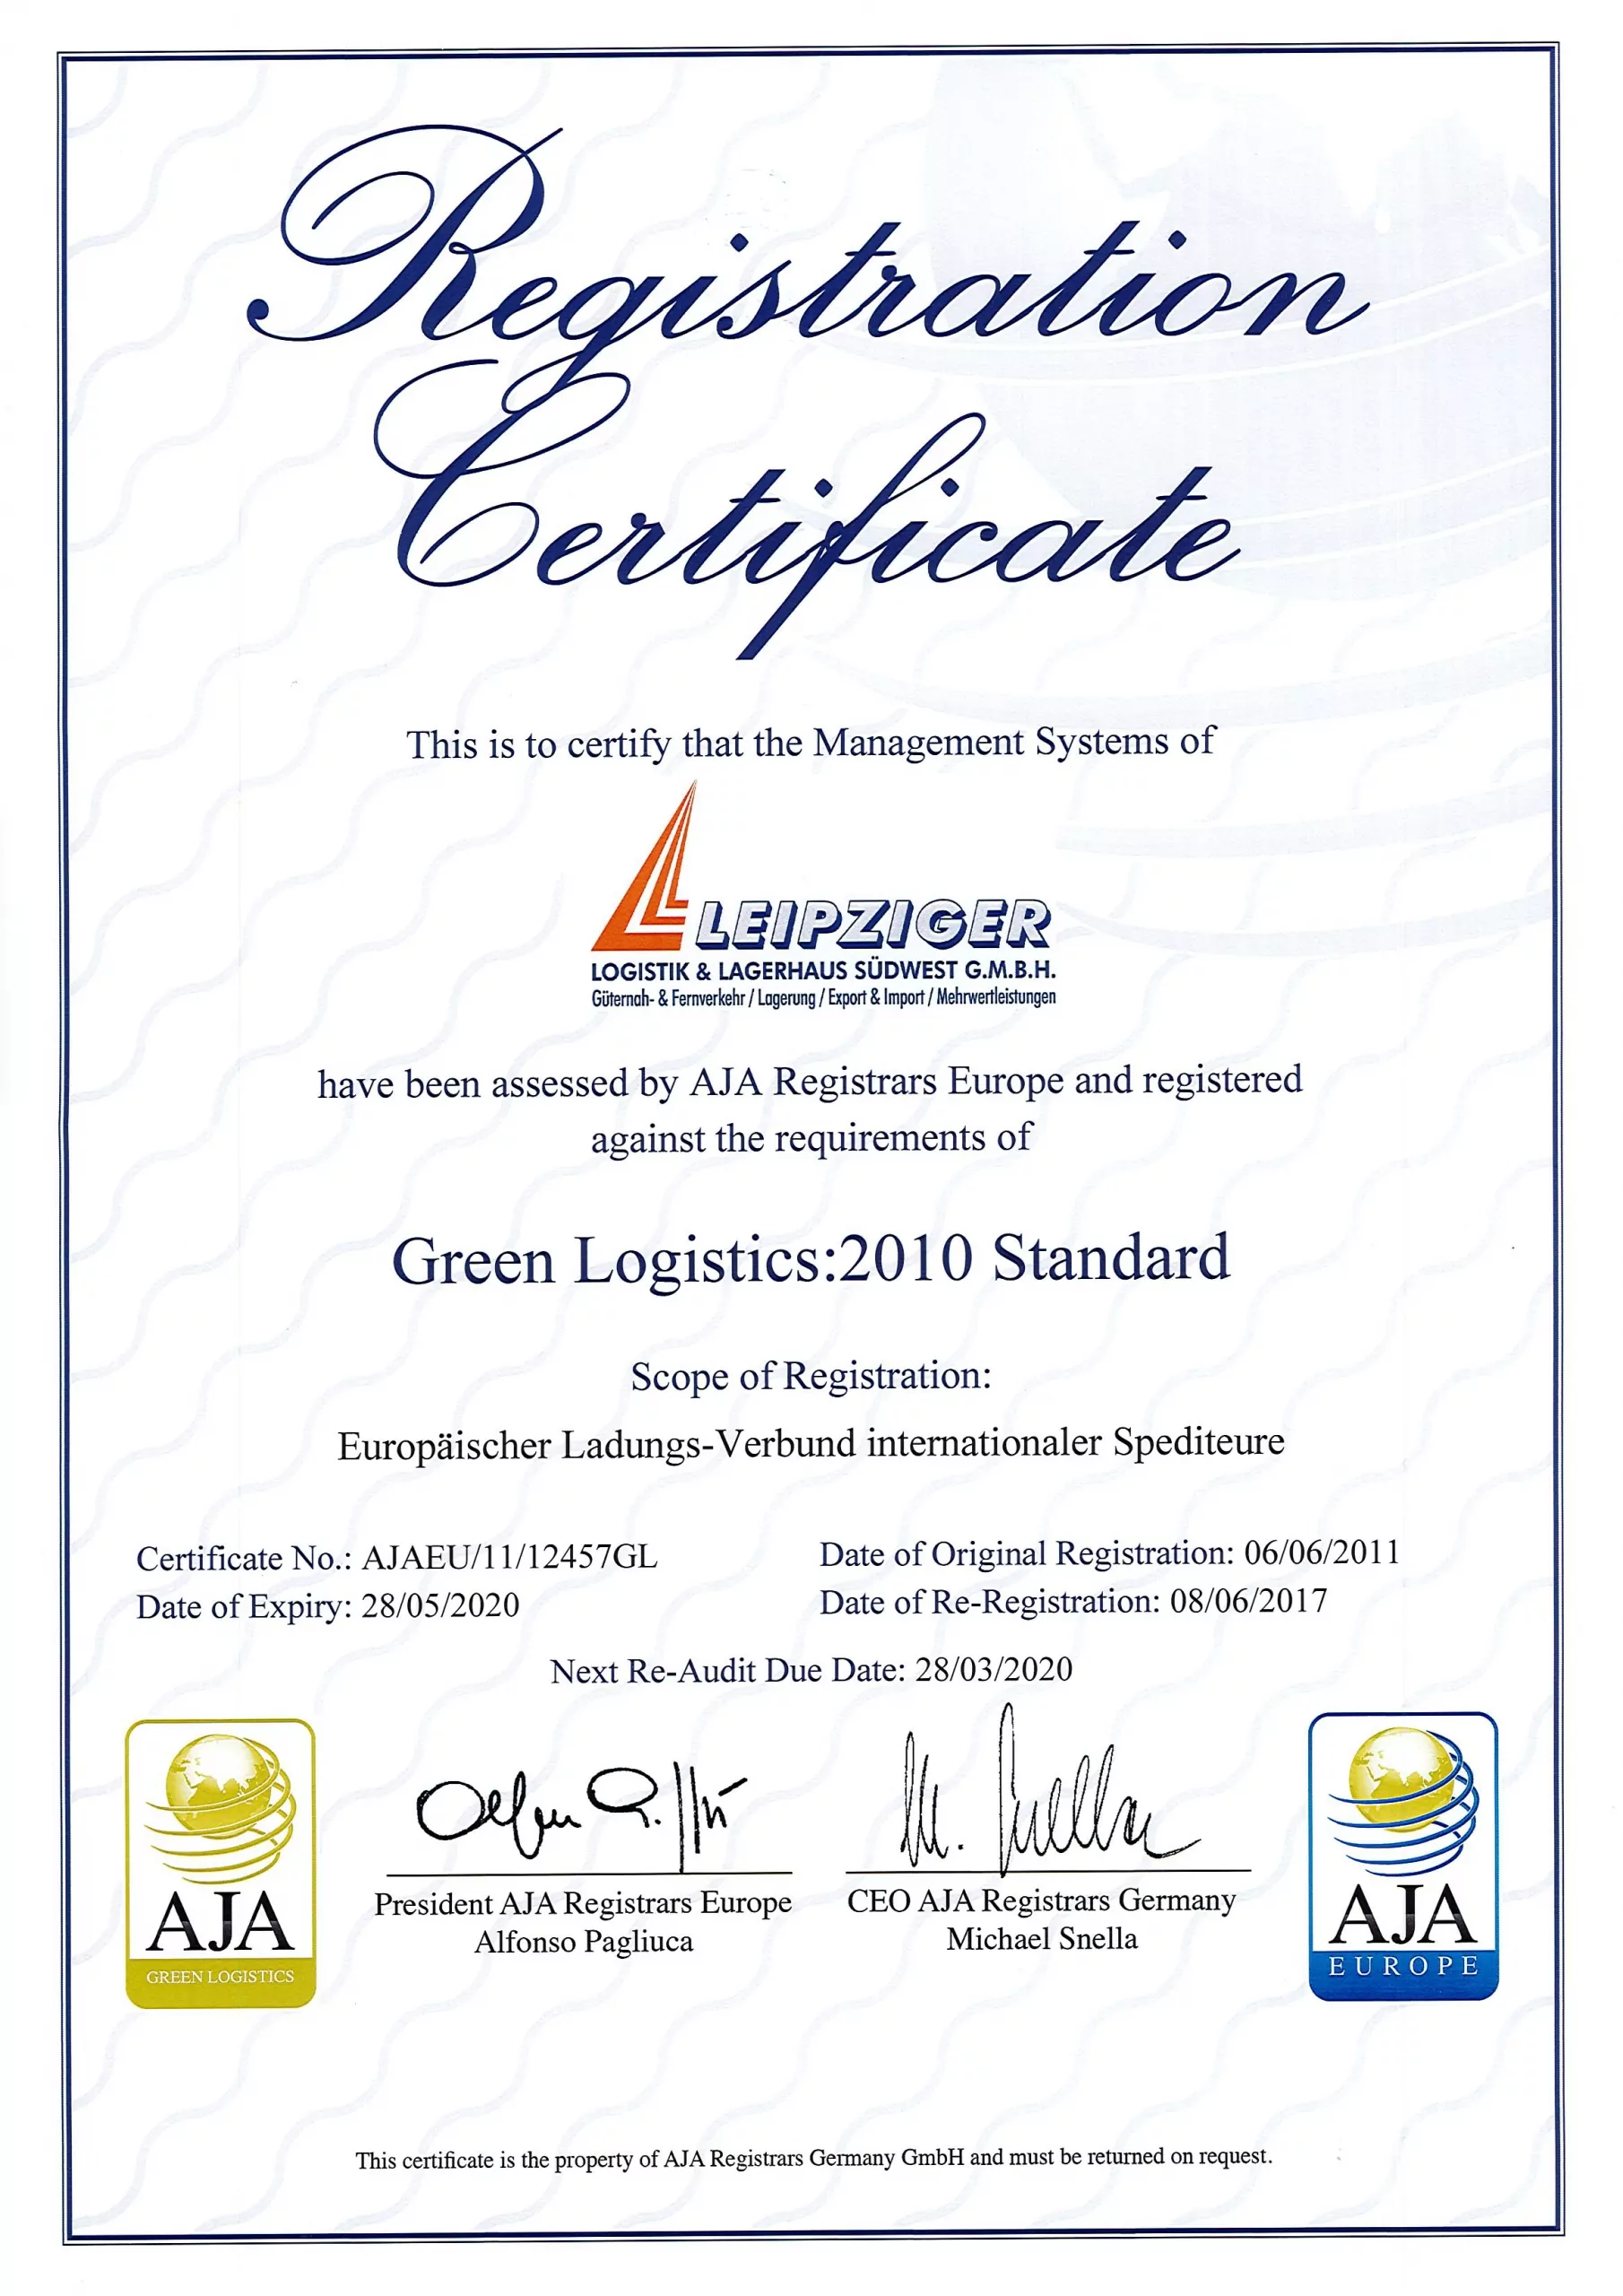 Green Logistics 2010 Standard